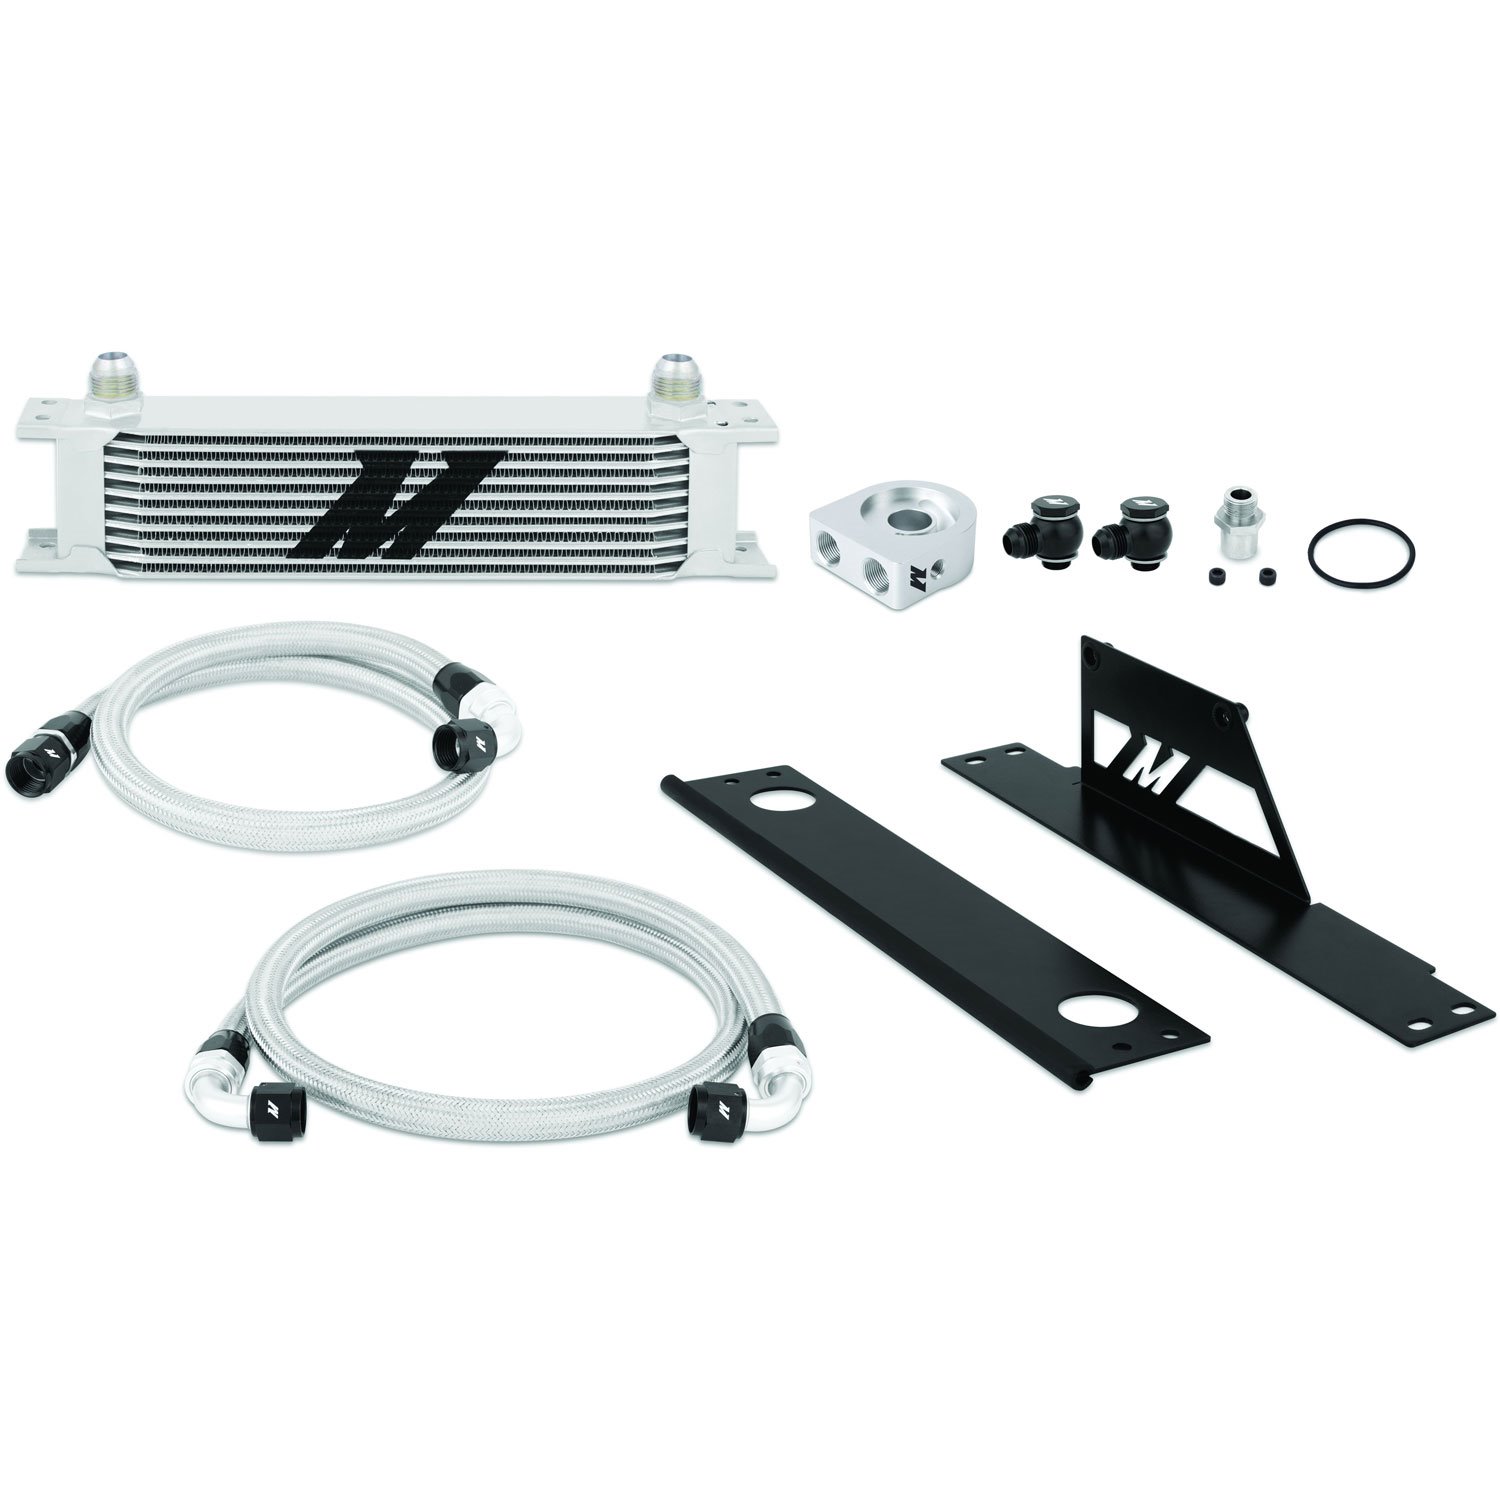 Subaru WRX and STI Oil Cooler Kit -